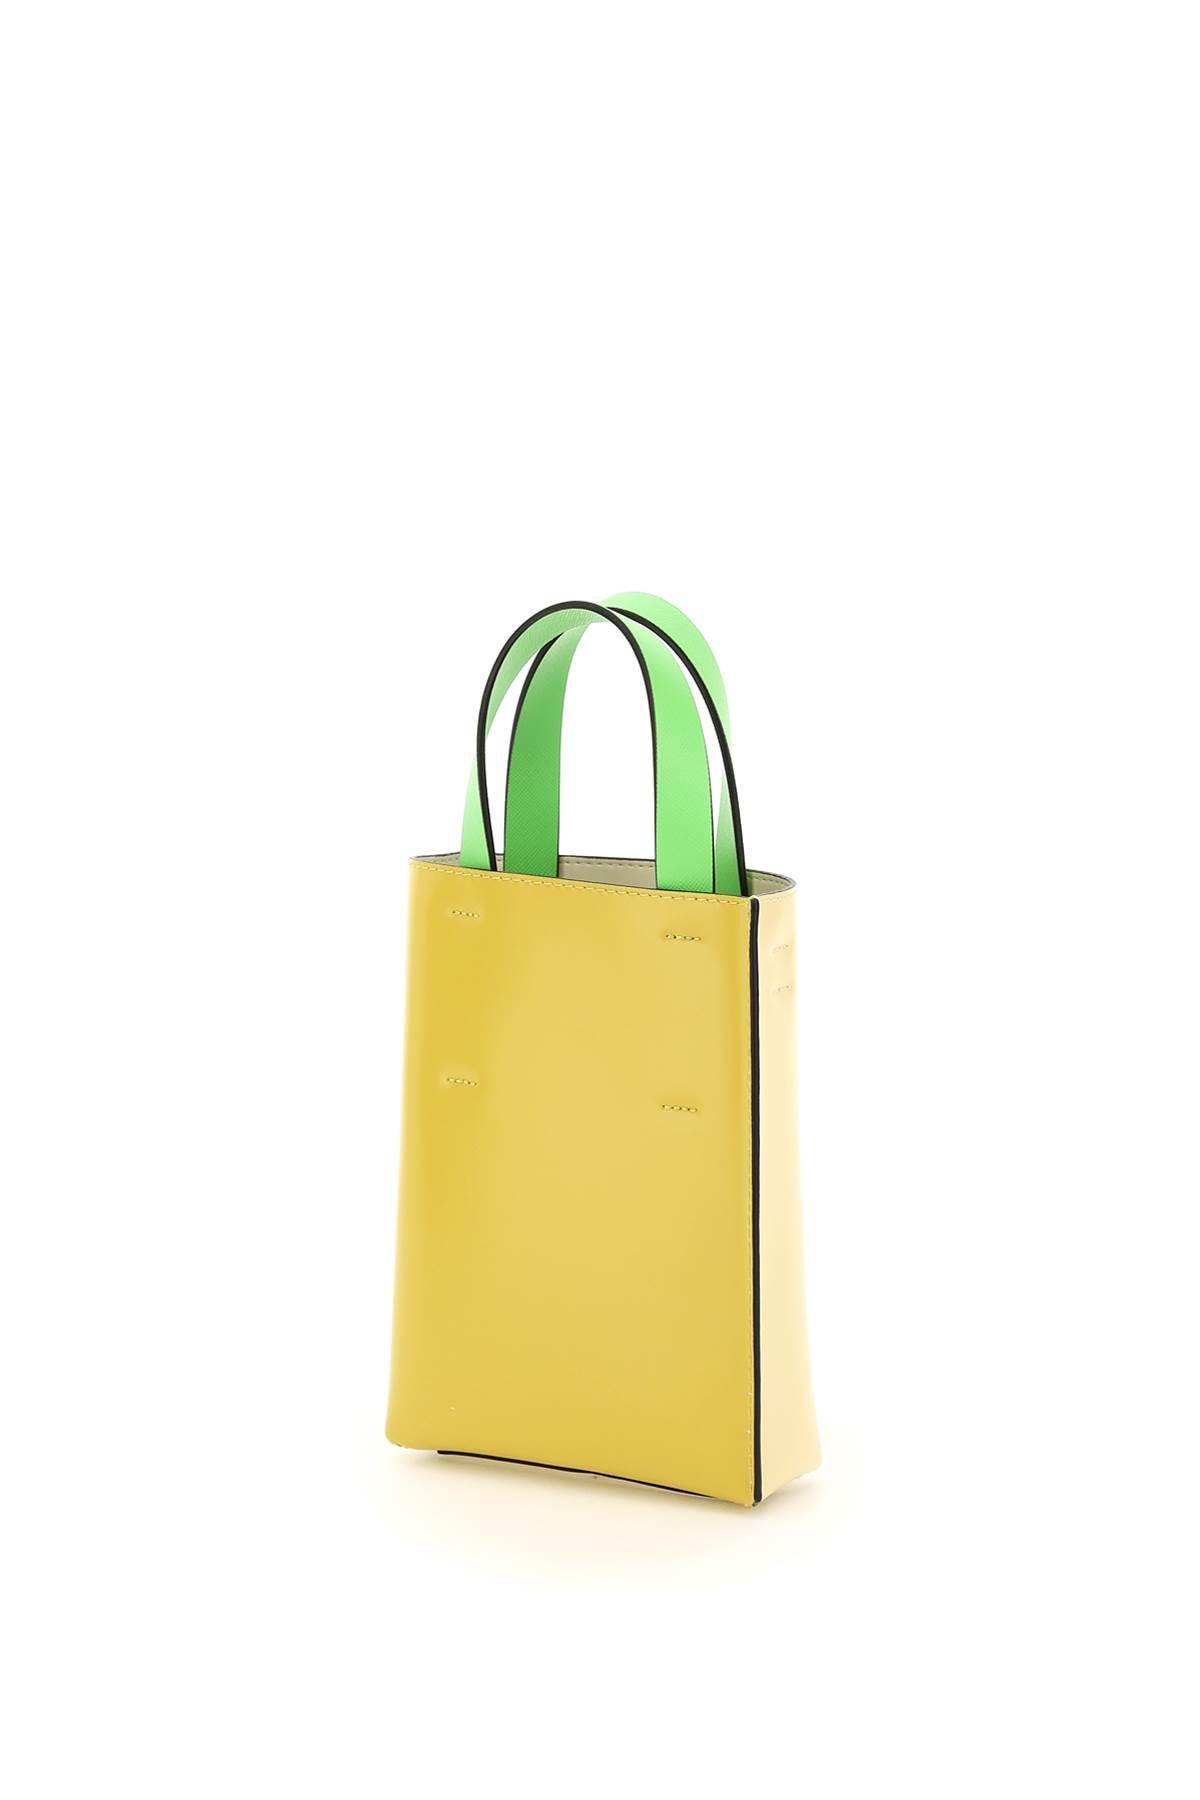 Marni Leather Museo Nano Tote Bag in Yellow/Green (Green) - Save 